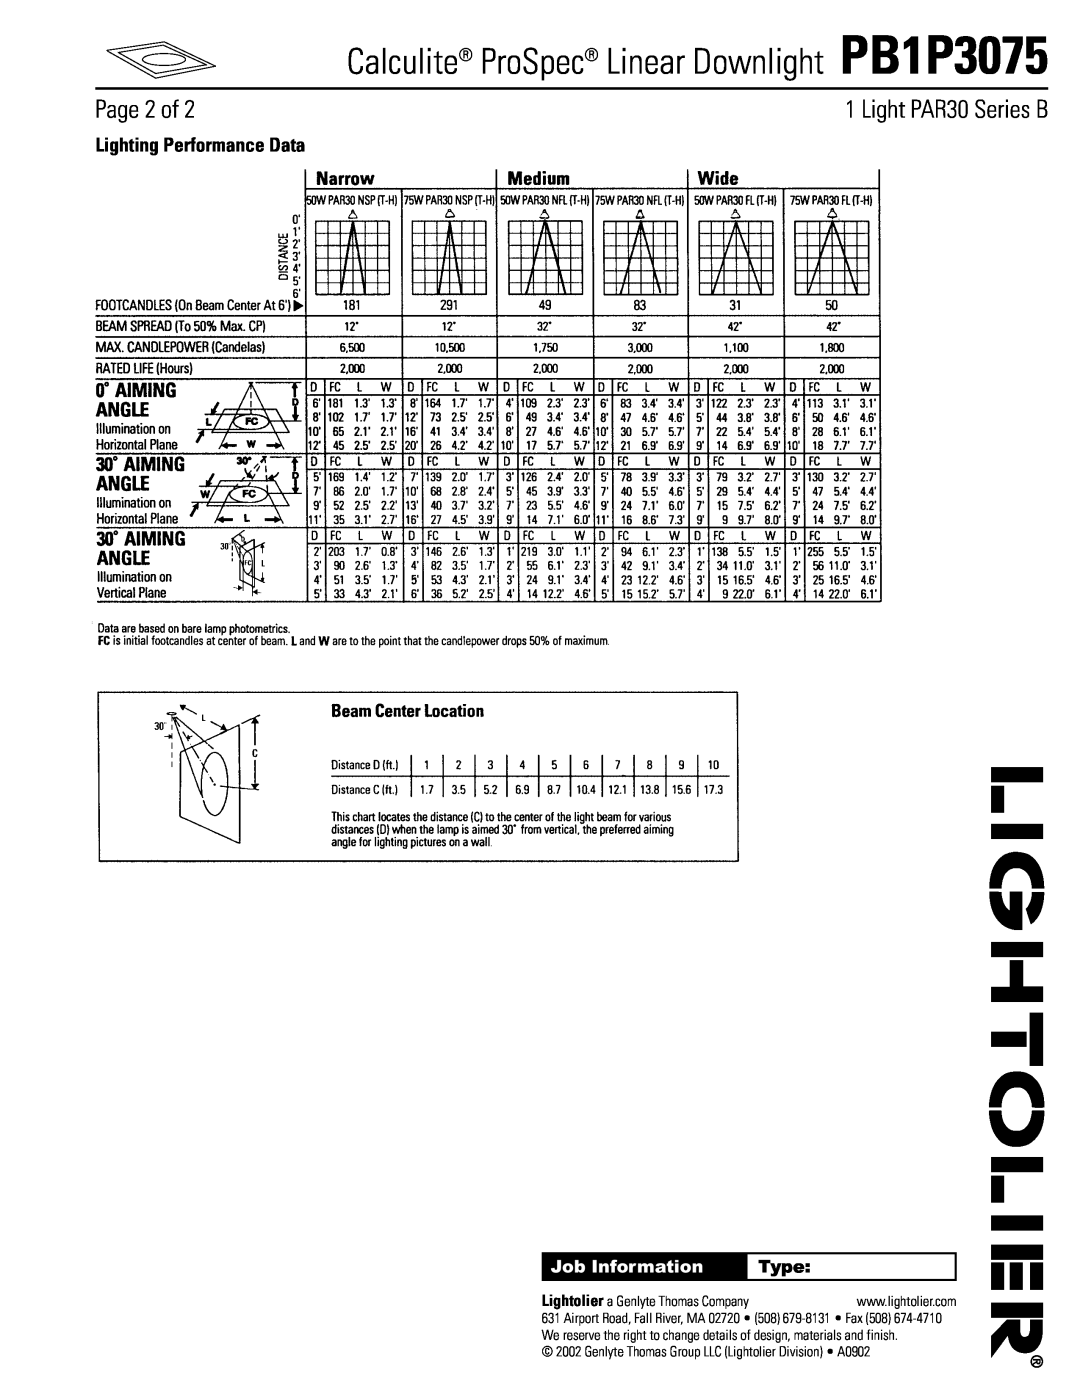 Lightolier PB1P3075 manual Page 2 of, Light PAR30 Series B, Lighting Performance Data, Job Information, Type 